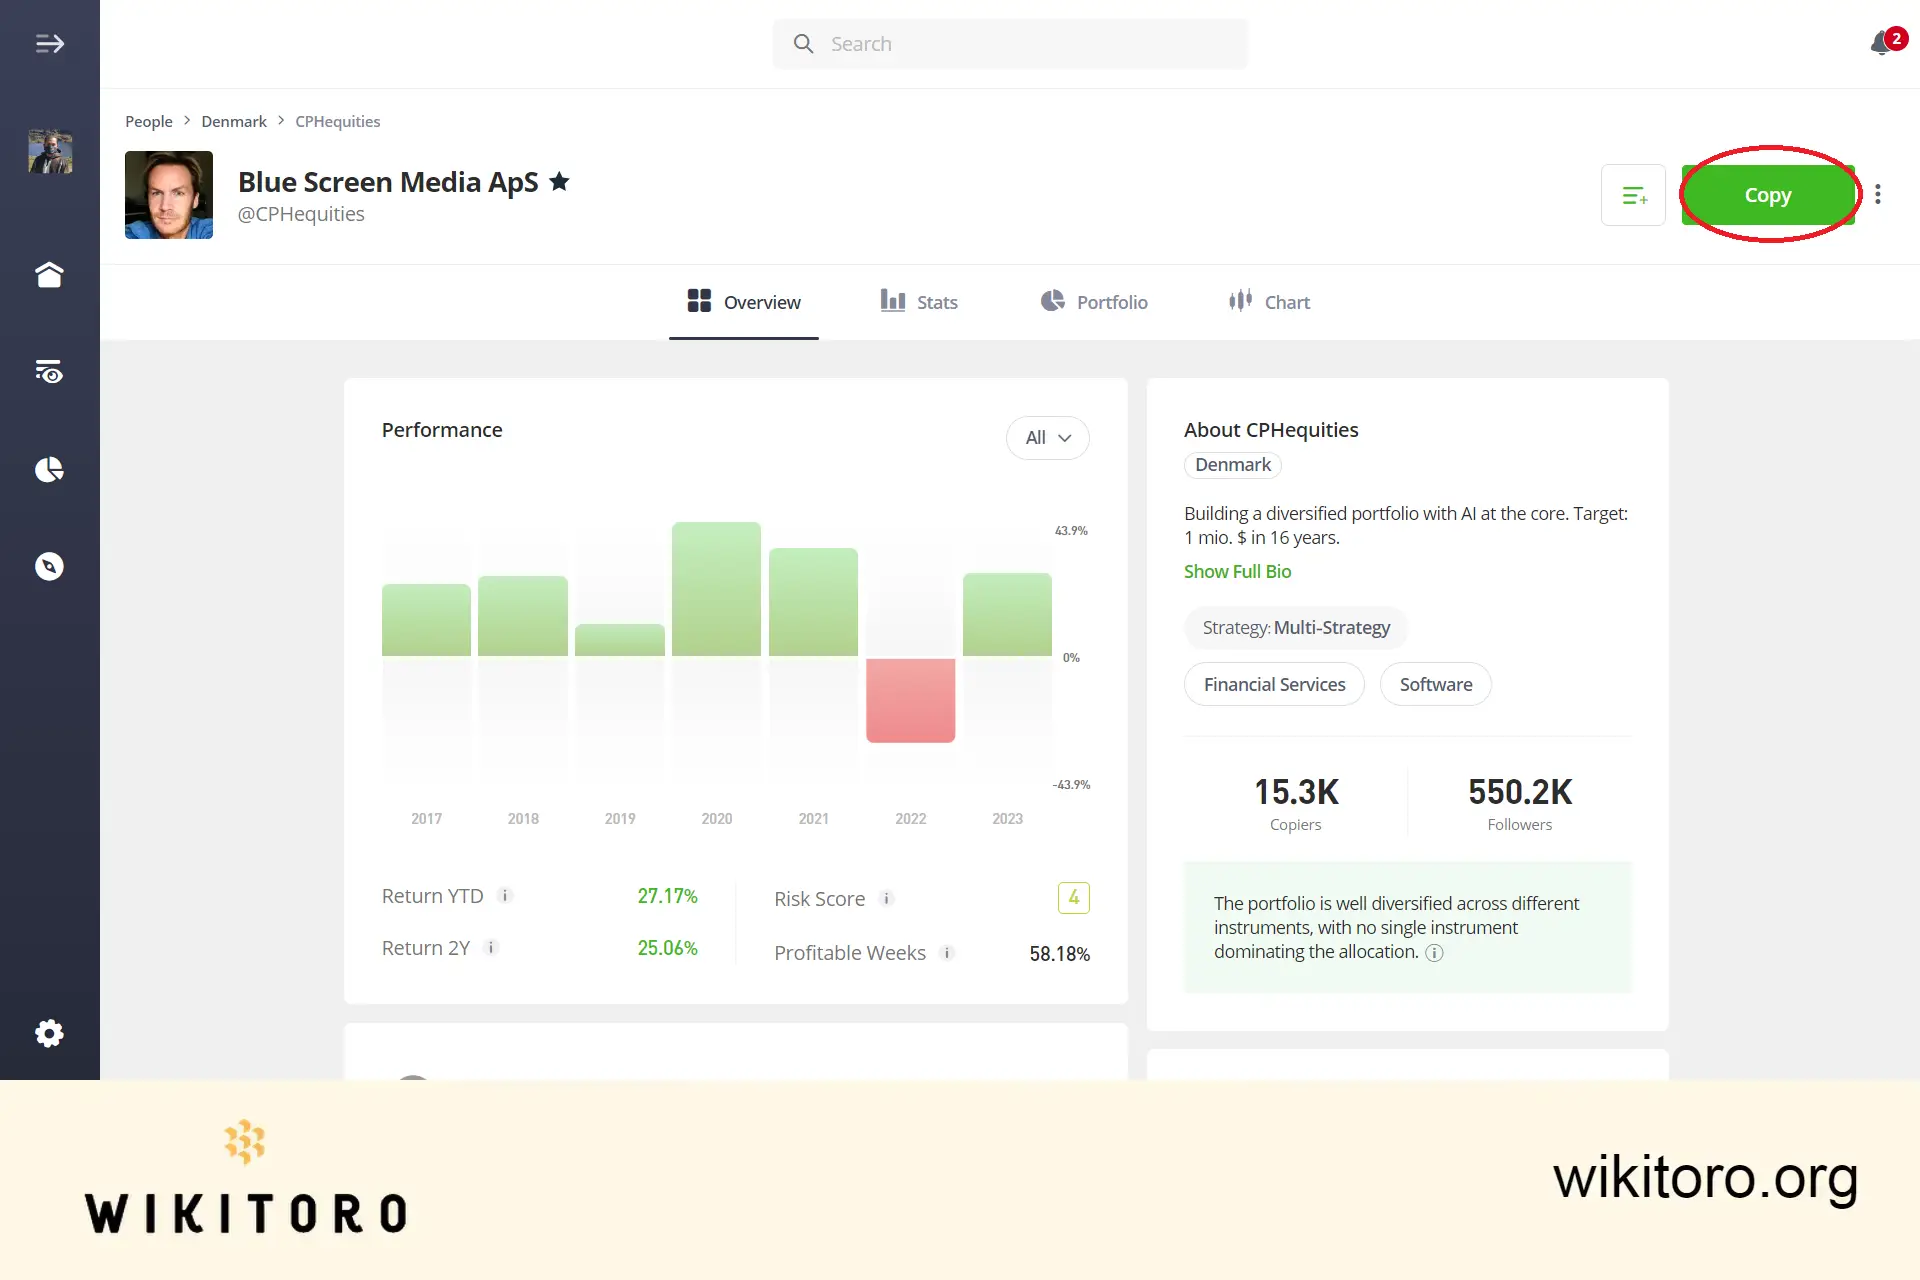 eToro Popular Investor profile